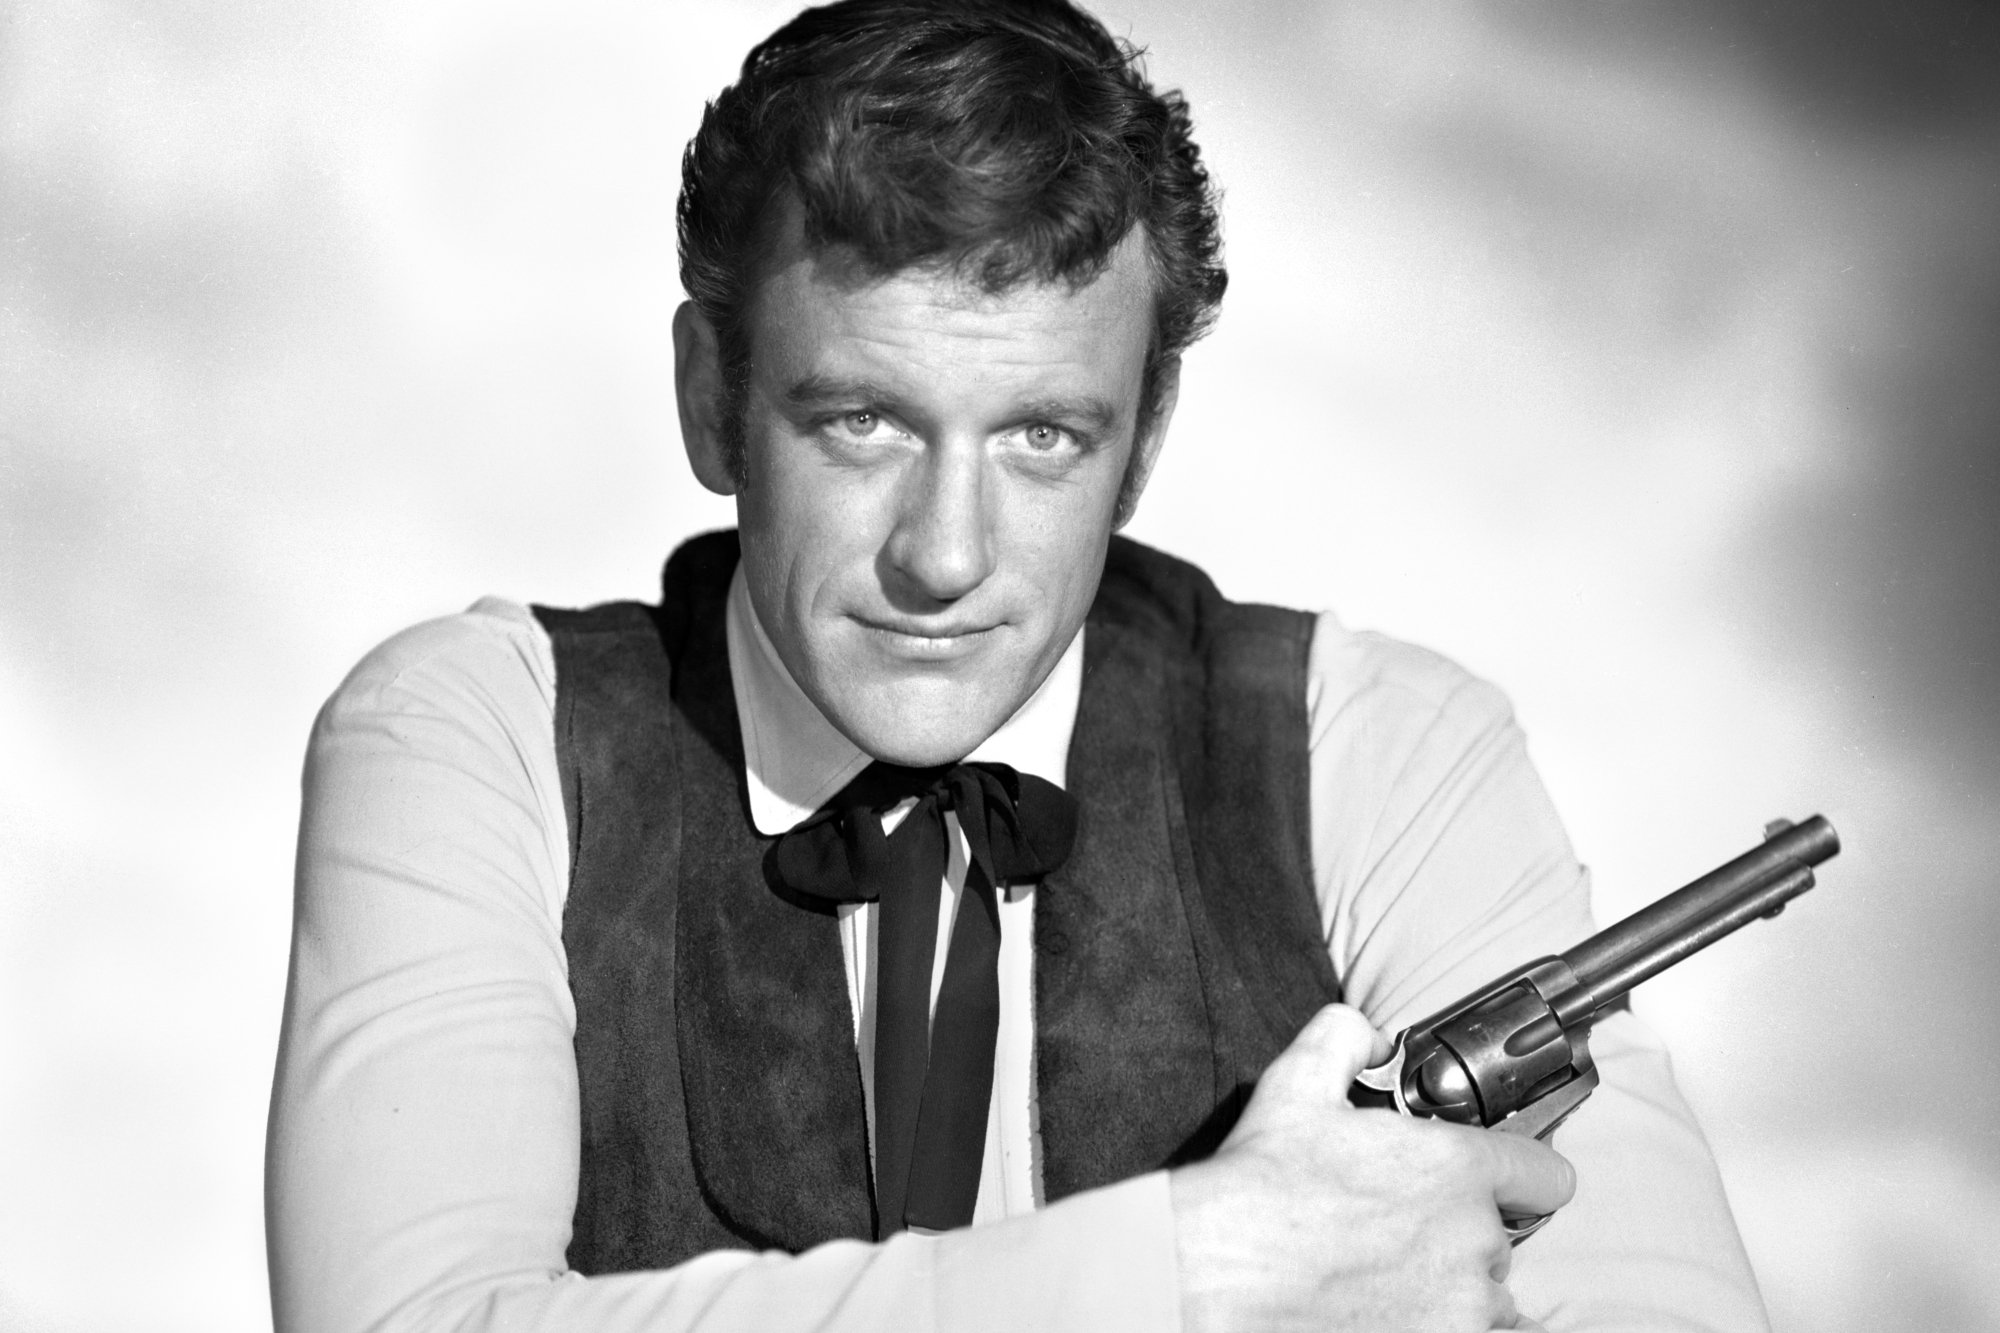 'Gunsmoke' James Arness as Matt Dillon holding a gun in a black-and-white portrait shot